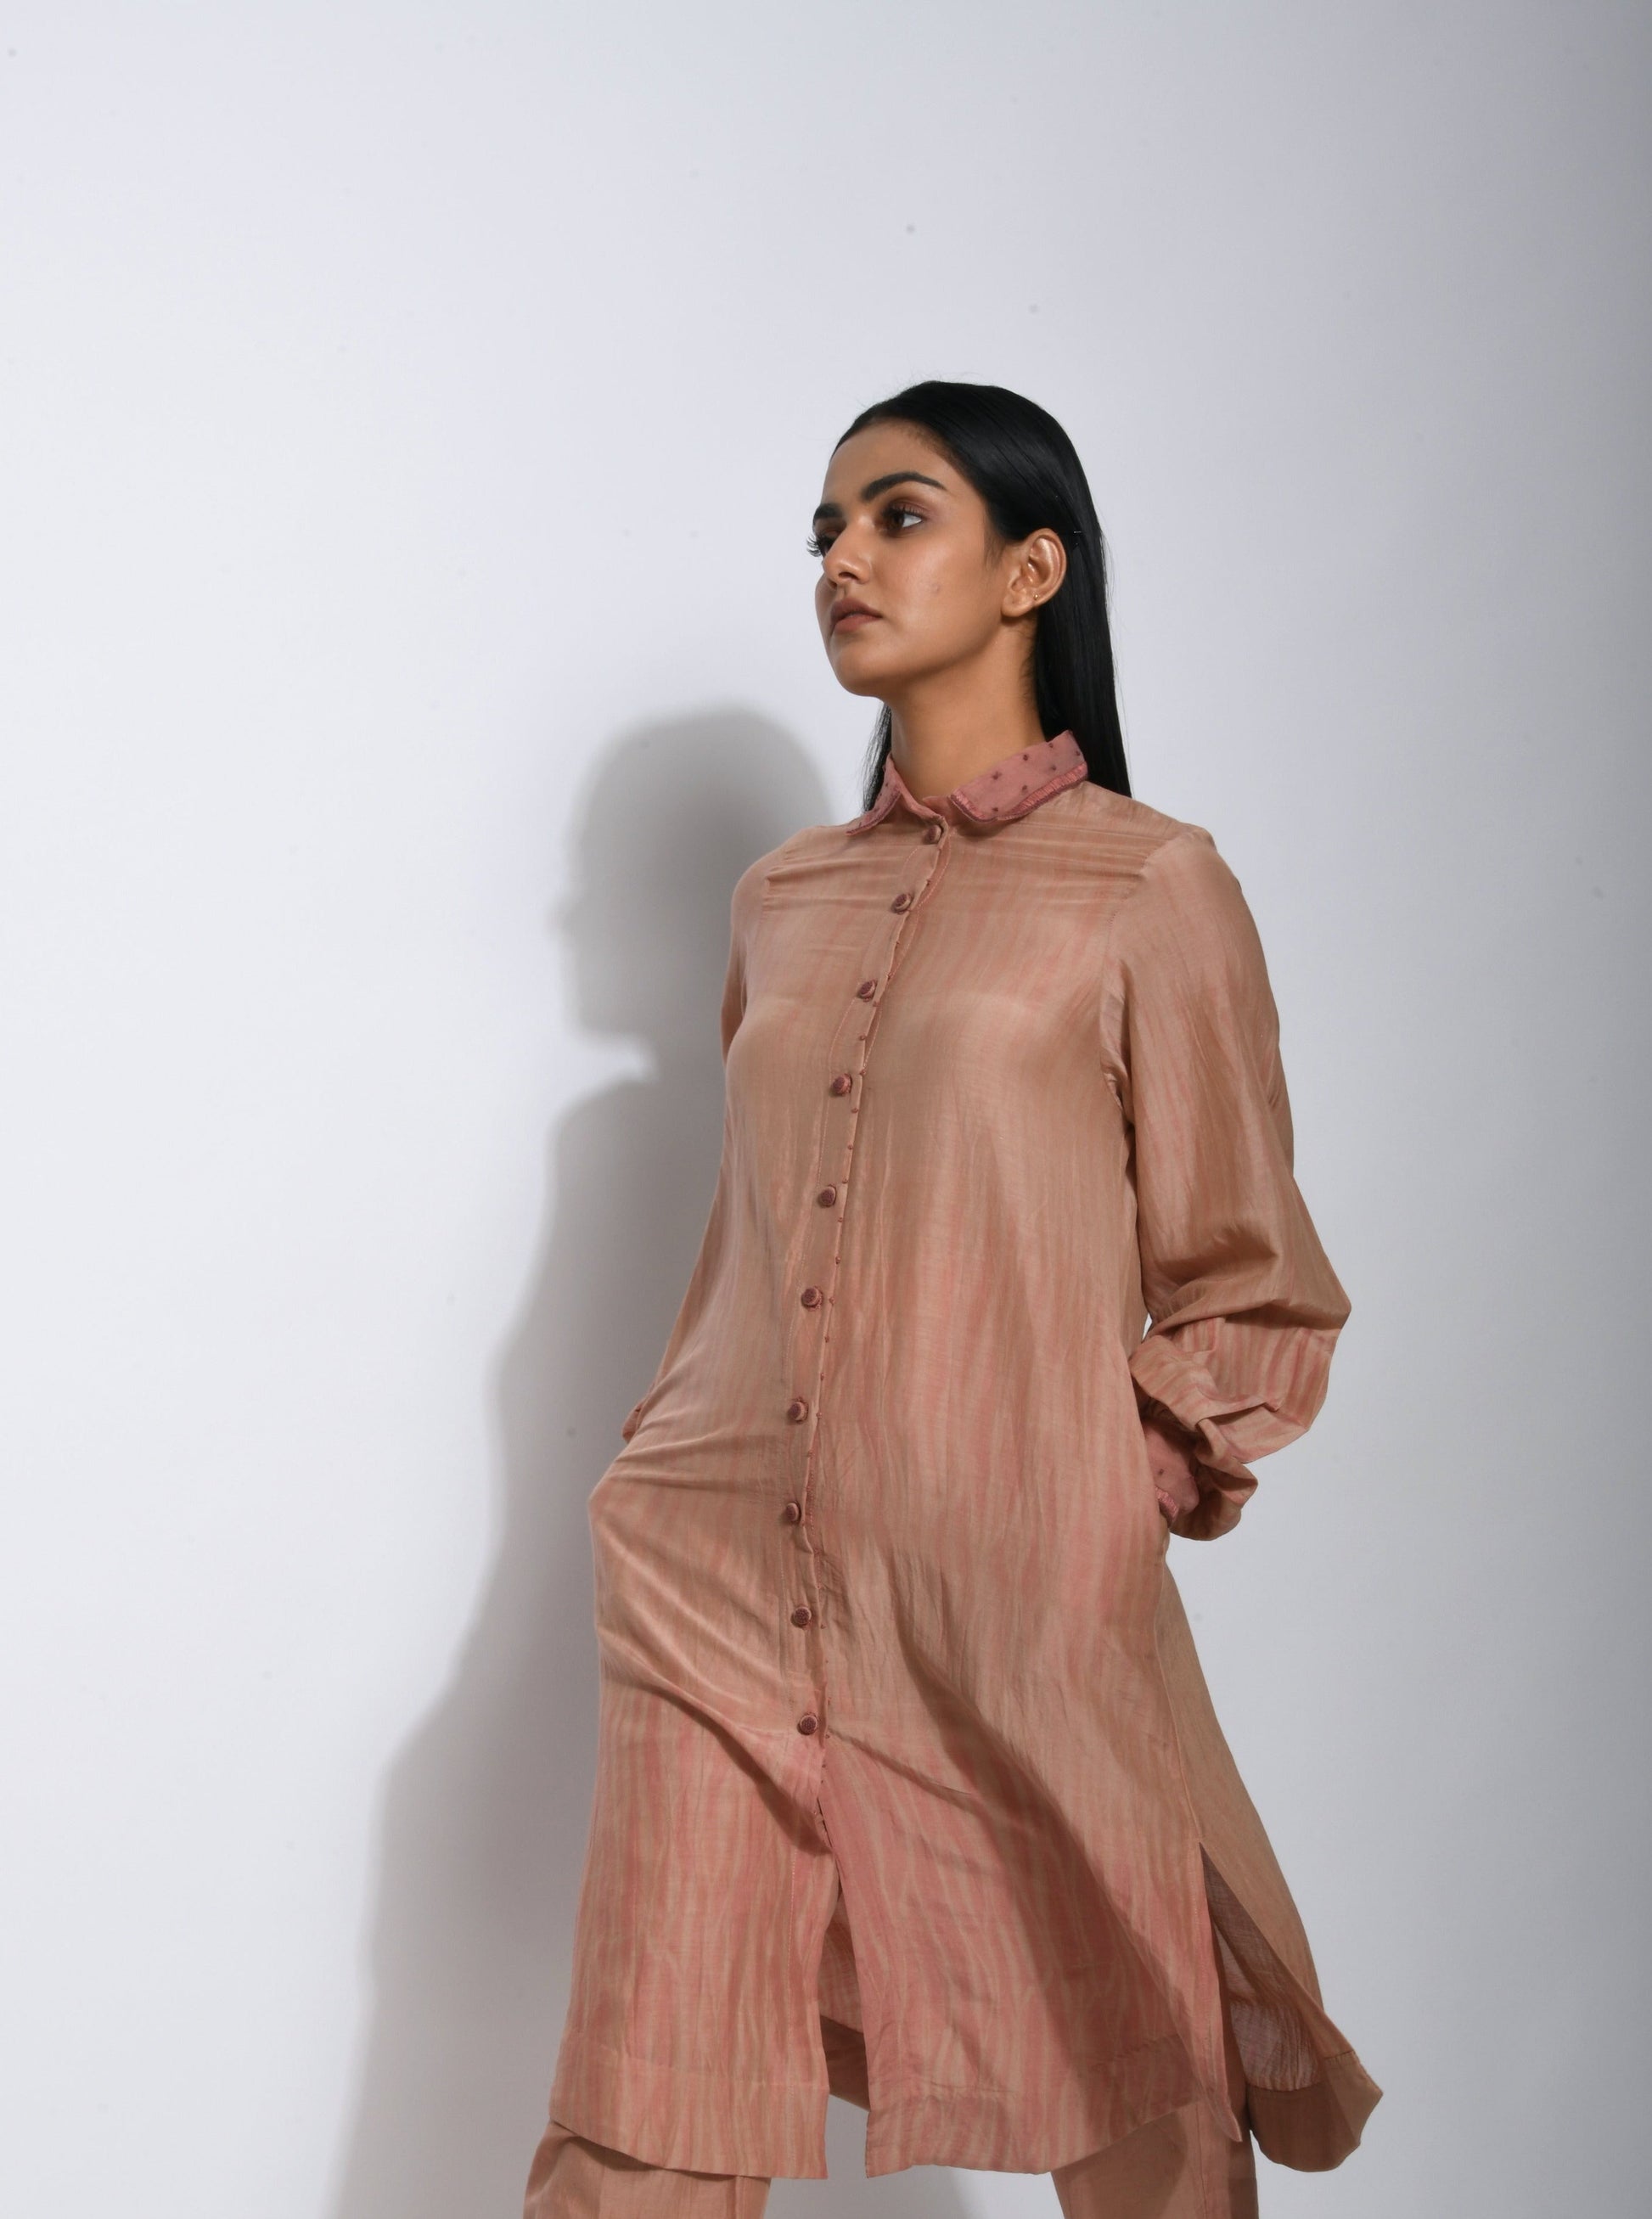 Brown Shirt Dresses Best Seller July, Between the Lines, Celebrity, Cotton Silk, Natural, Regular Fit, The Loom Art Kamakhyaa